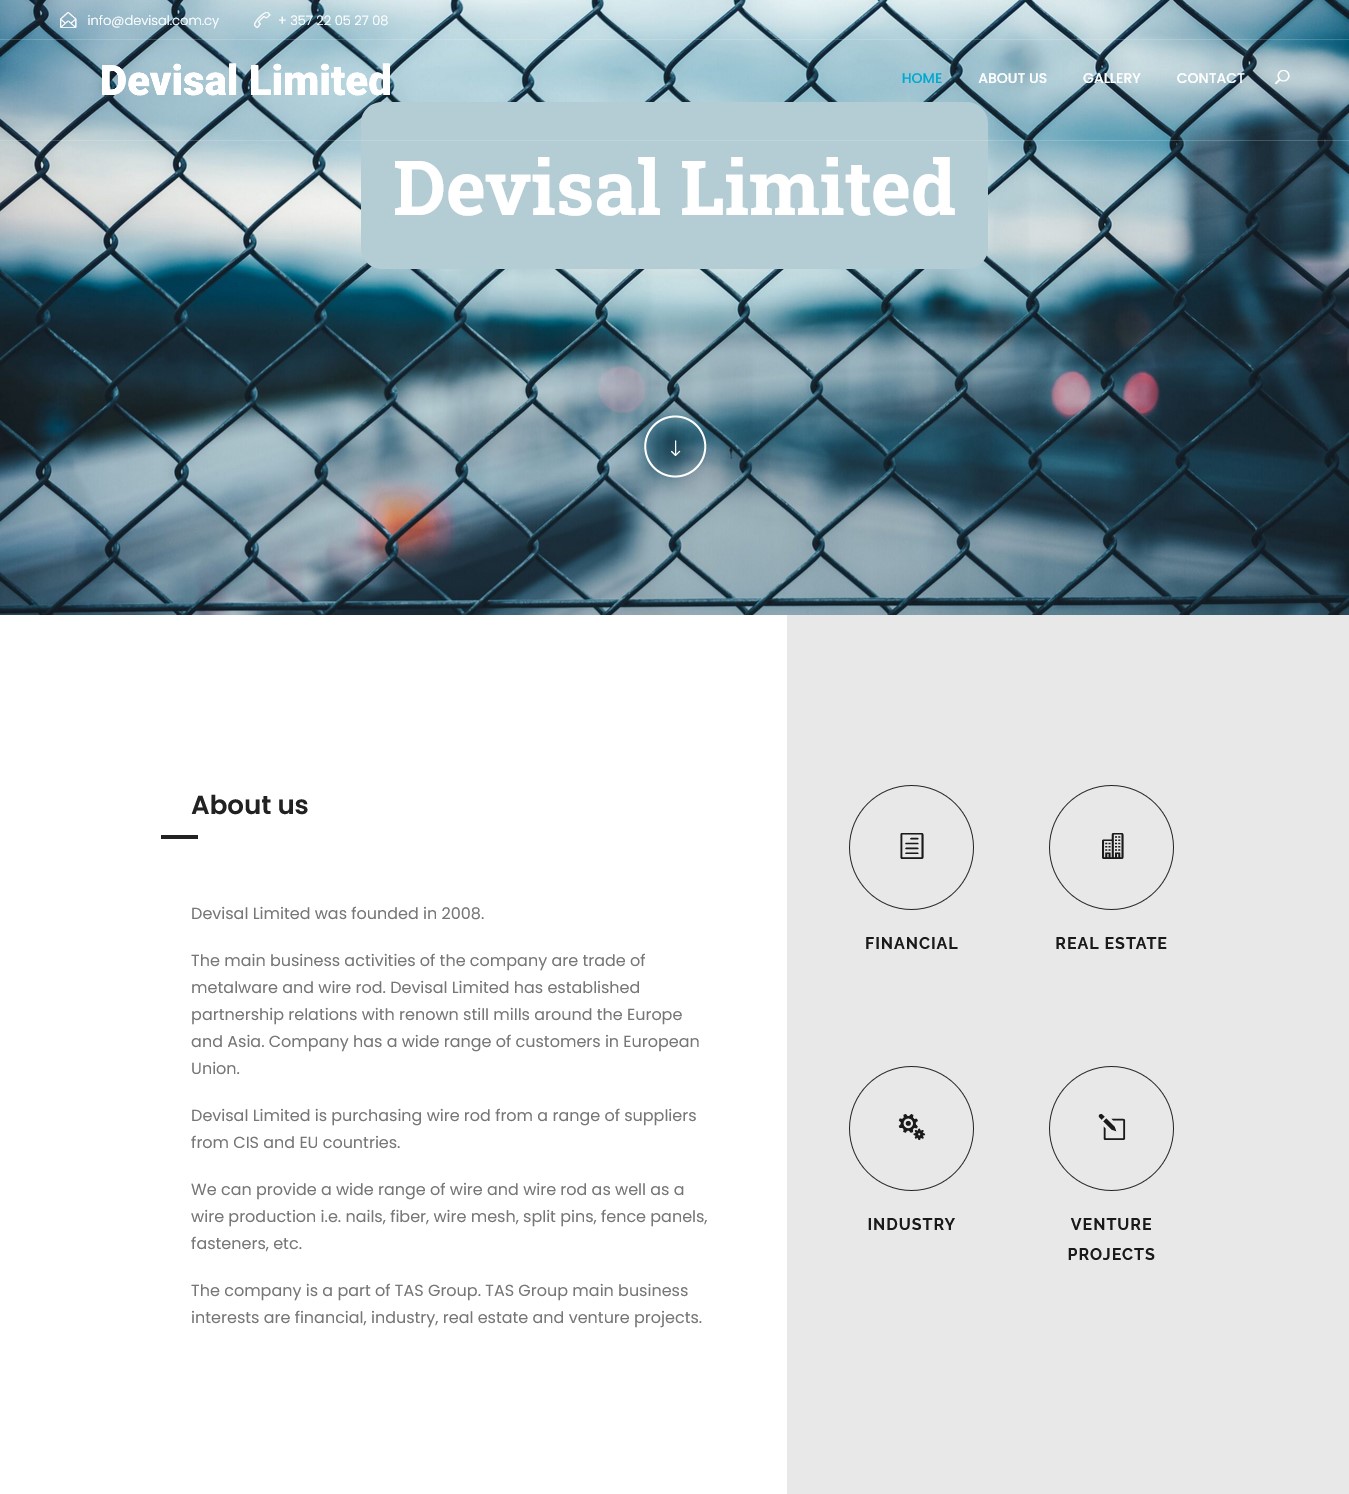 Devisal Limited